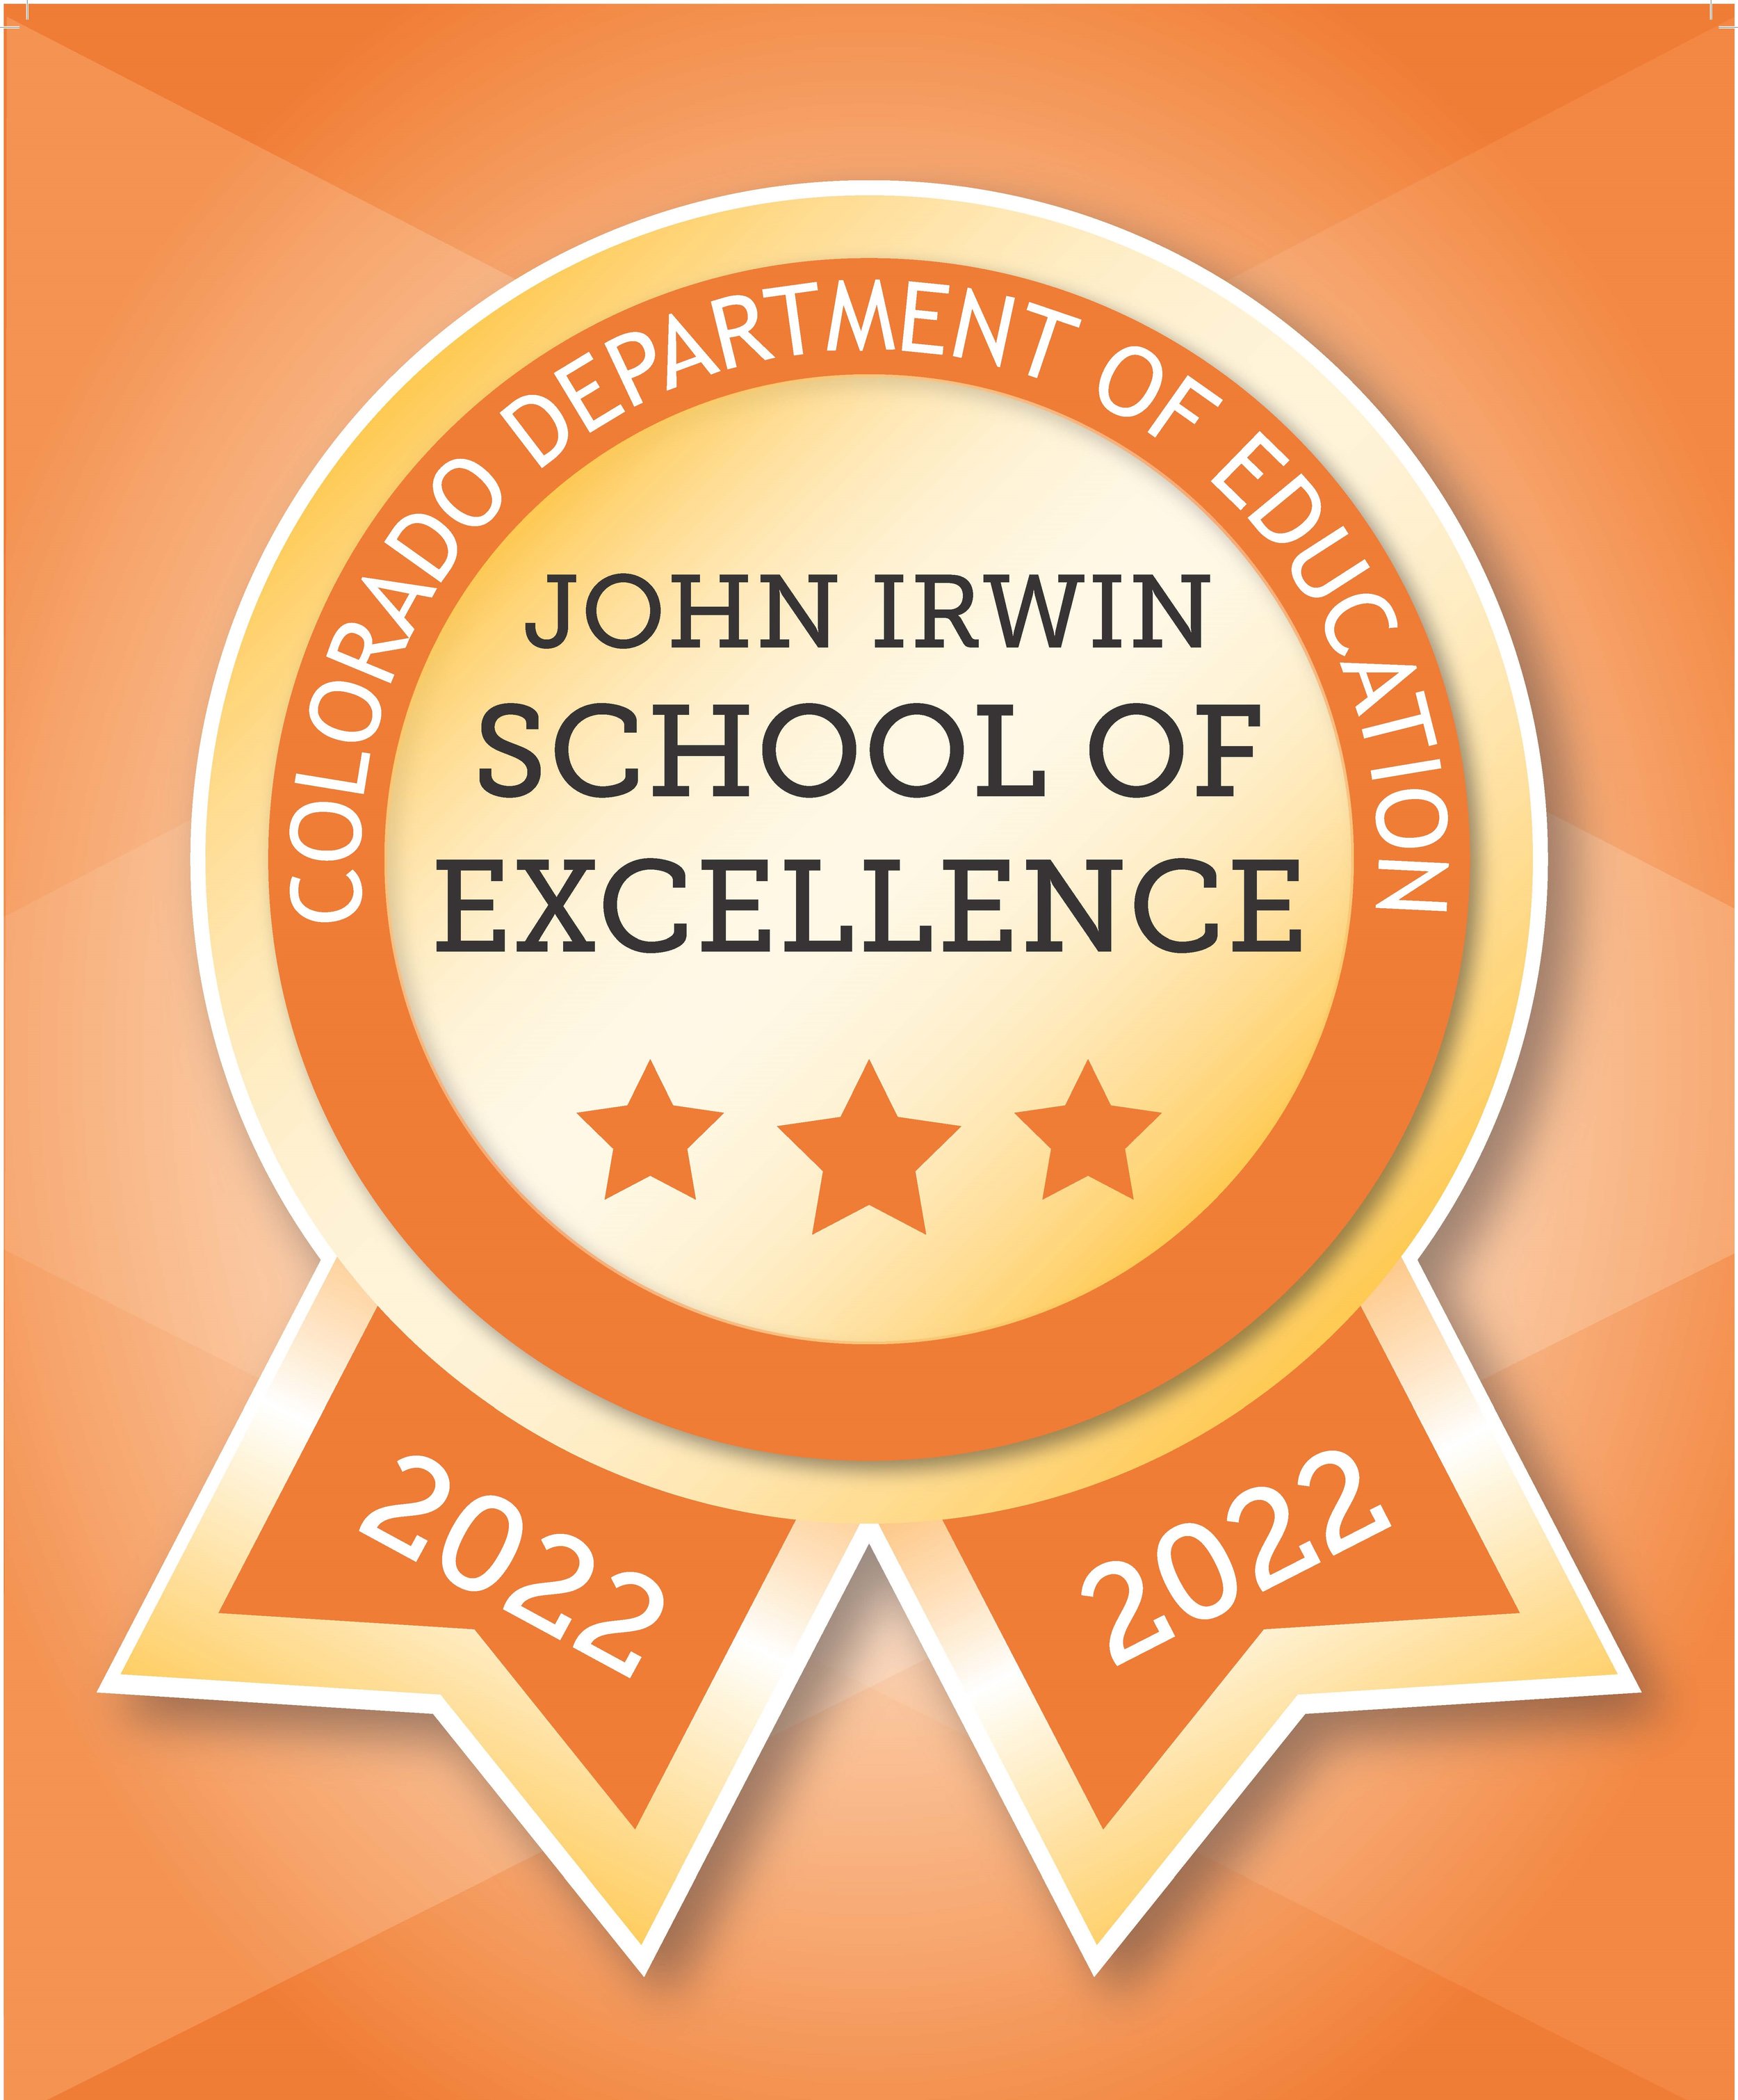 22-John Irwin School of Excellence banner.jpg